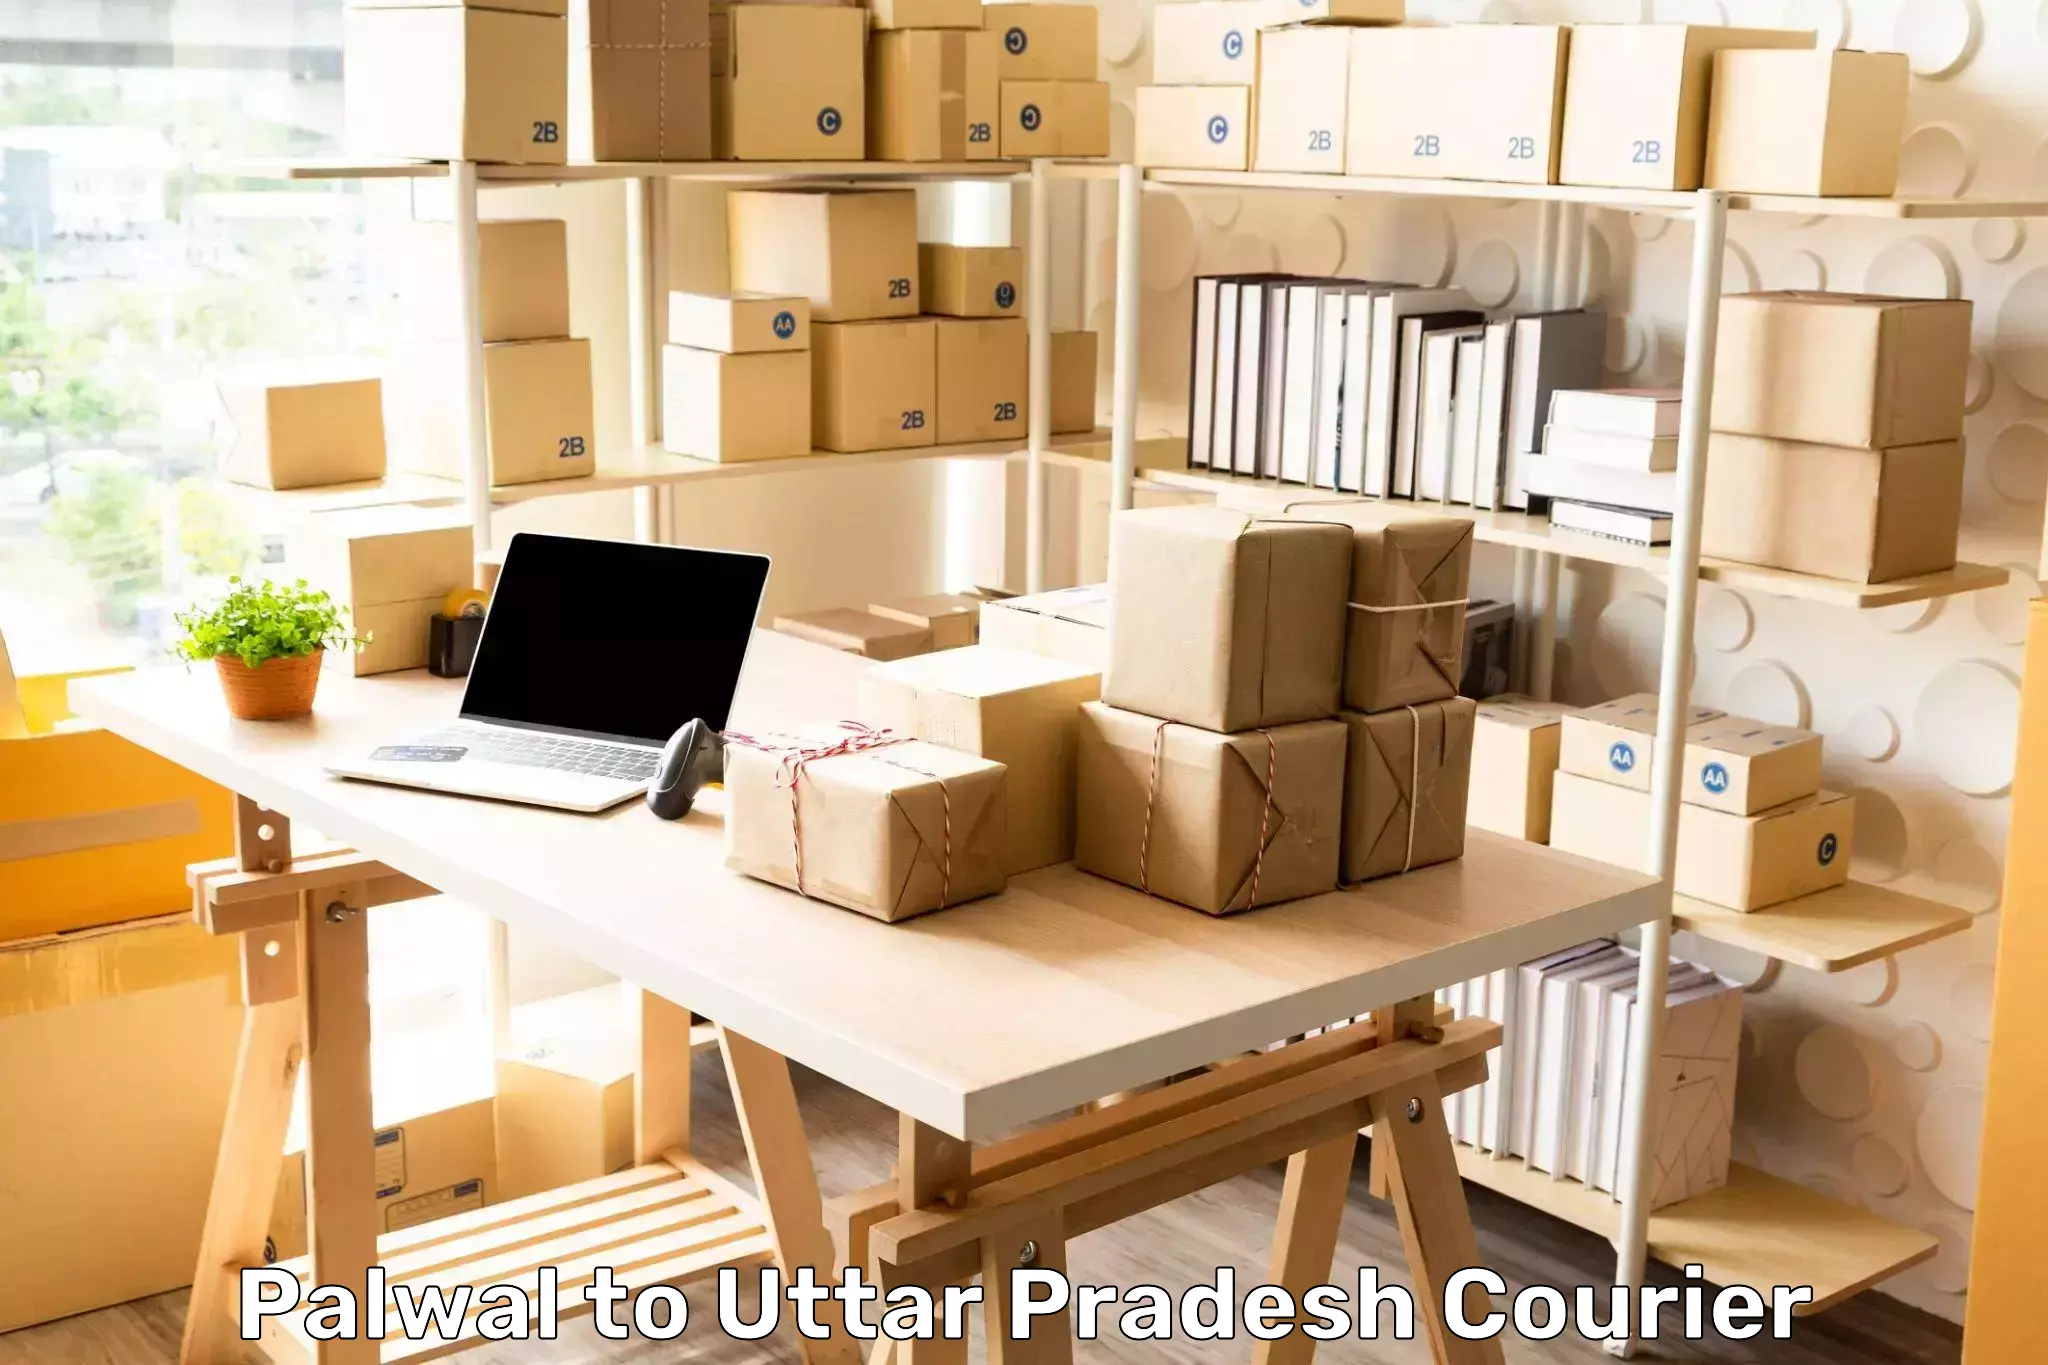 On-time shipping guarantee Palwal to Aligarh Muslim University